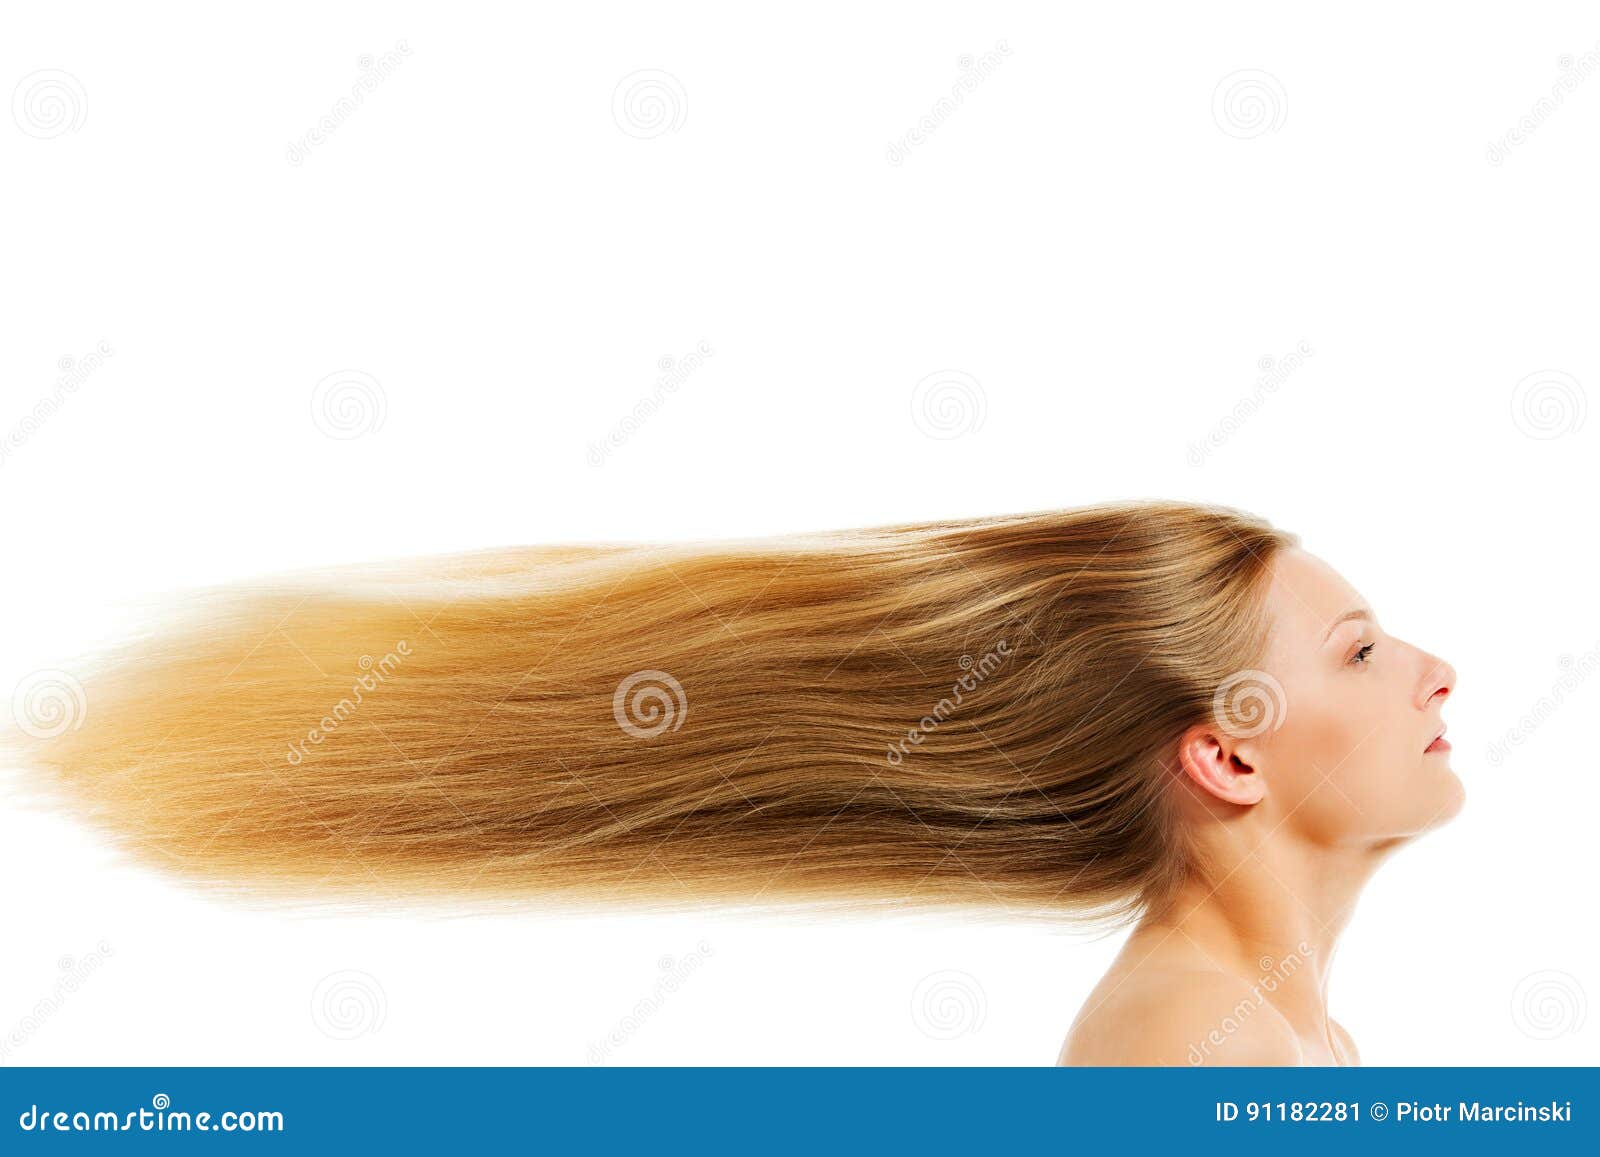 9. Beautiful Long Blonde Hair Inspiration - wide 4